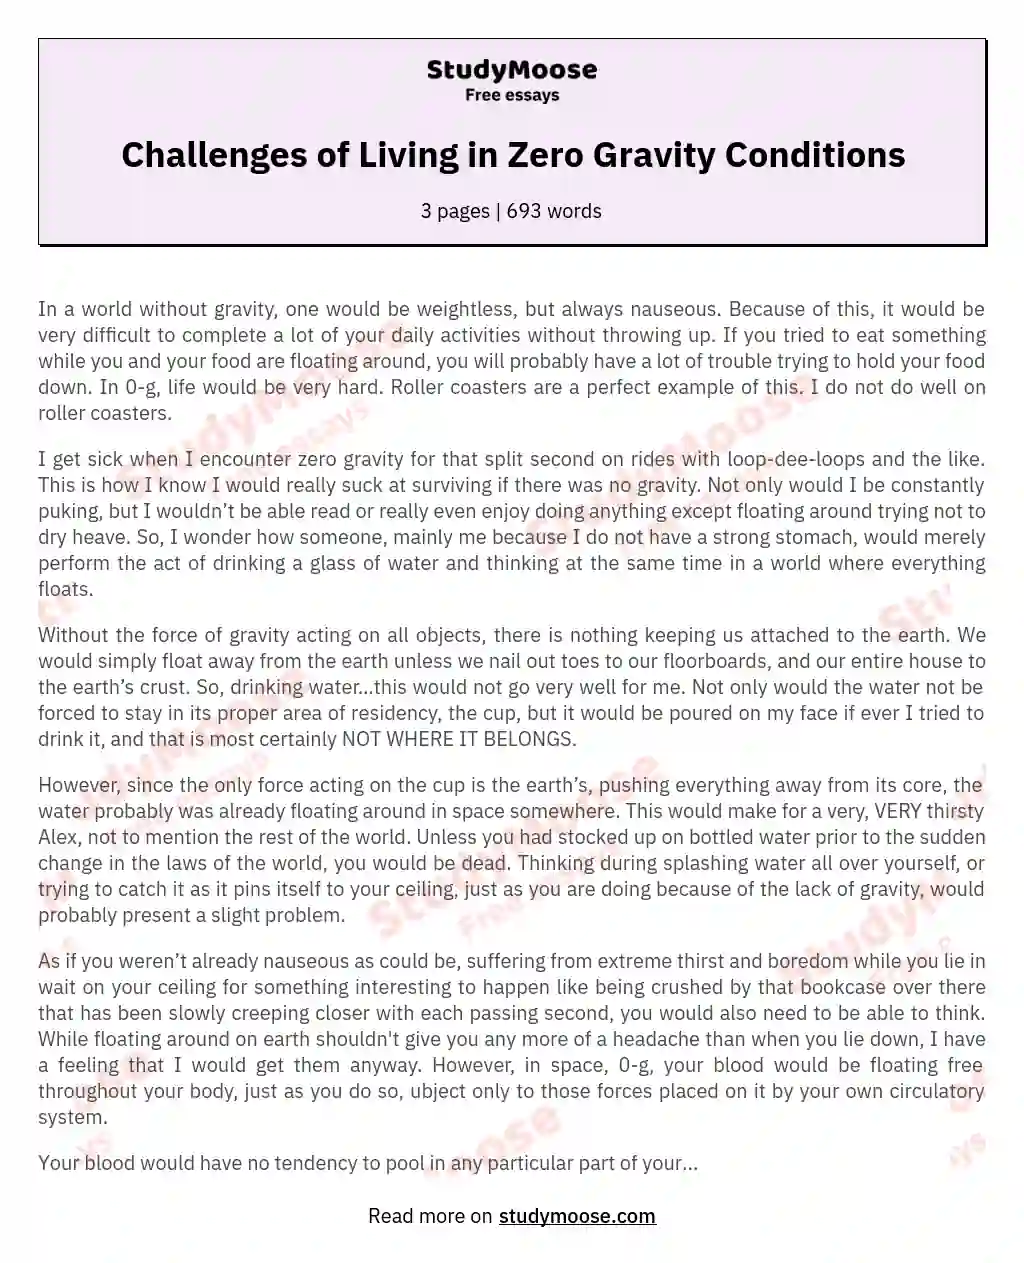 Challenges of Living in Zero Gravity Conditions essay